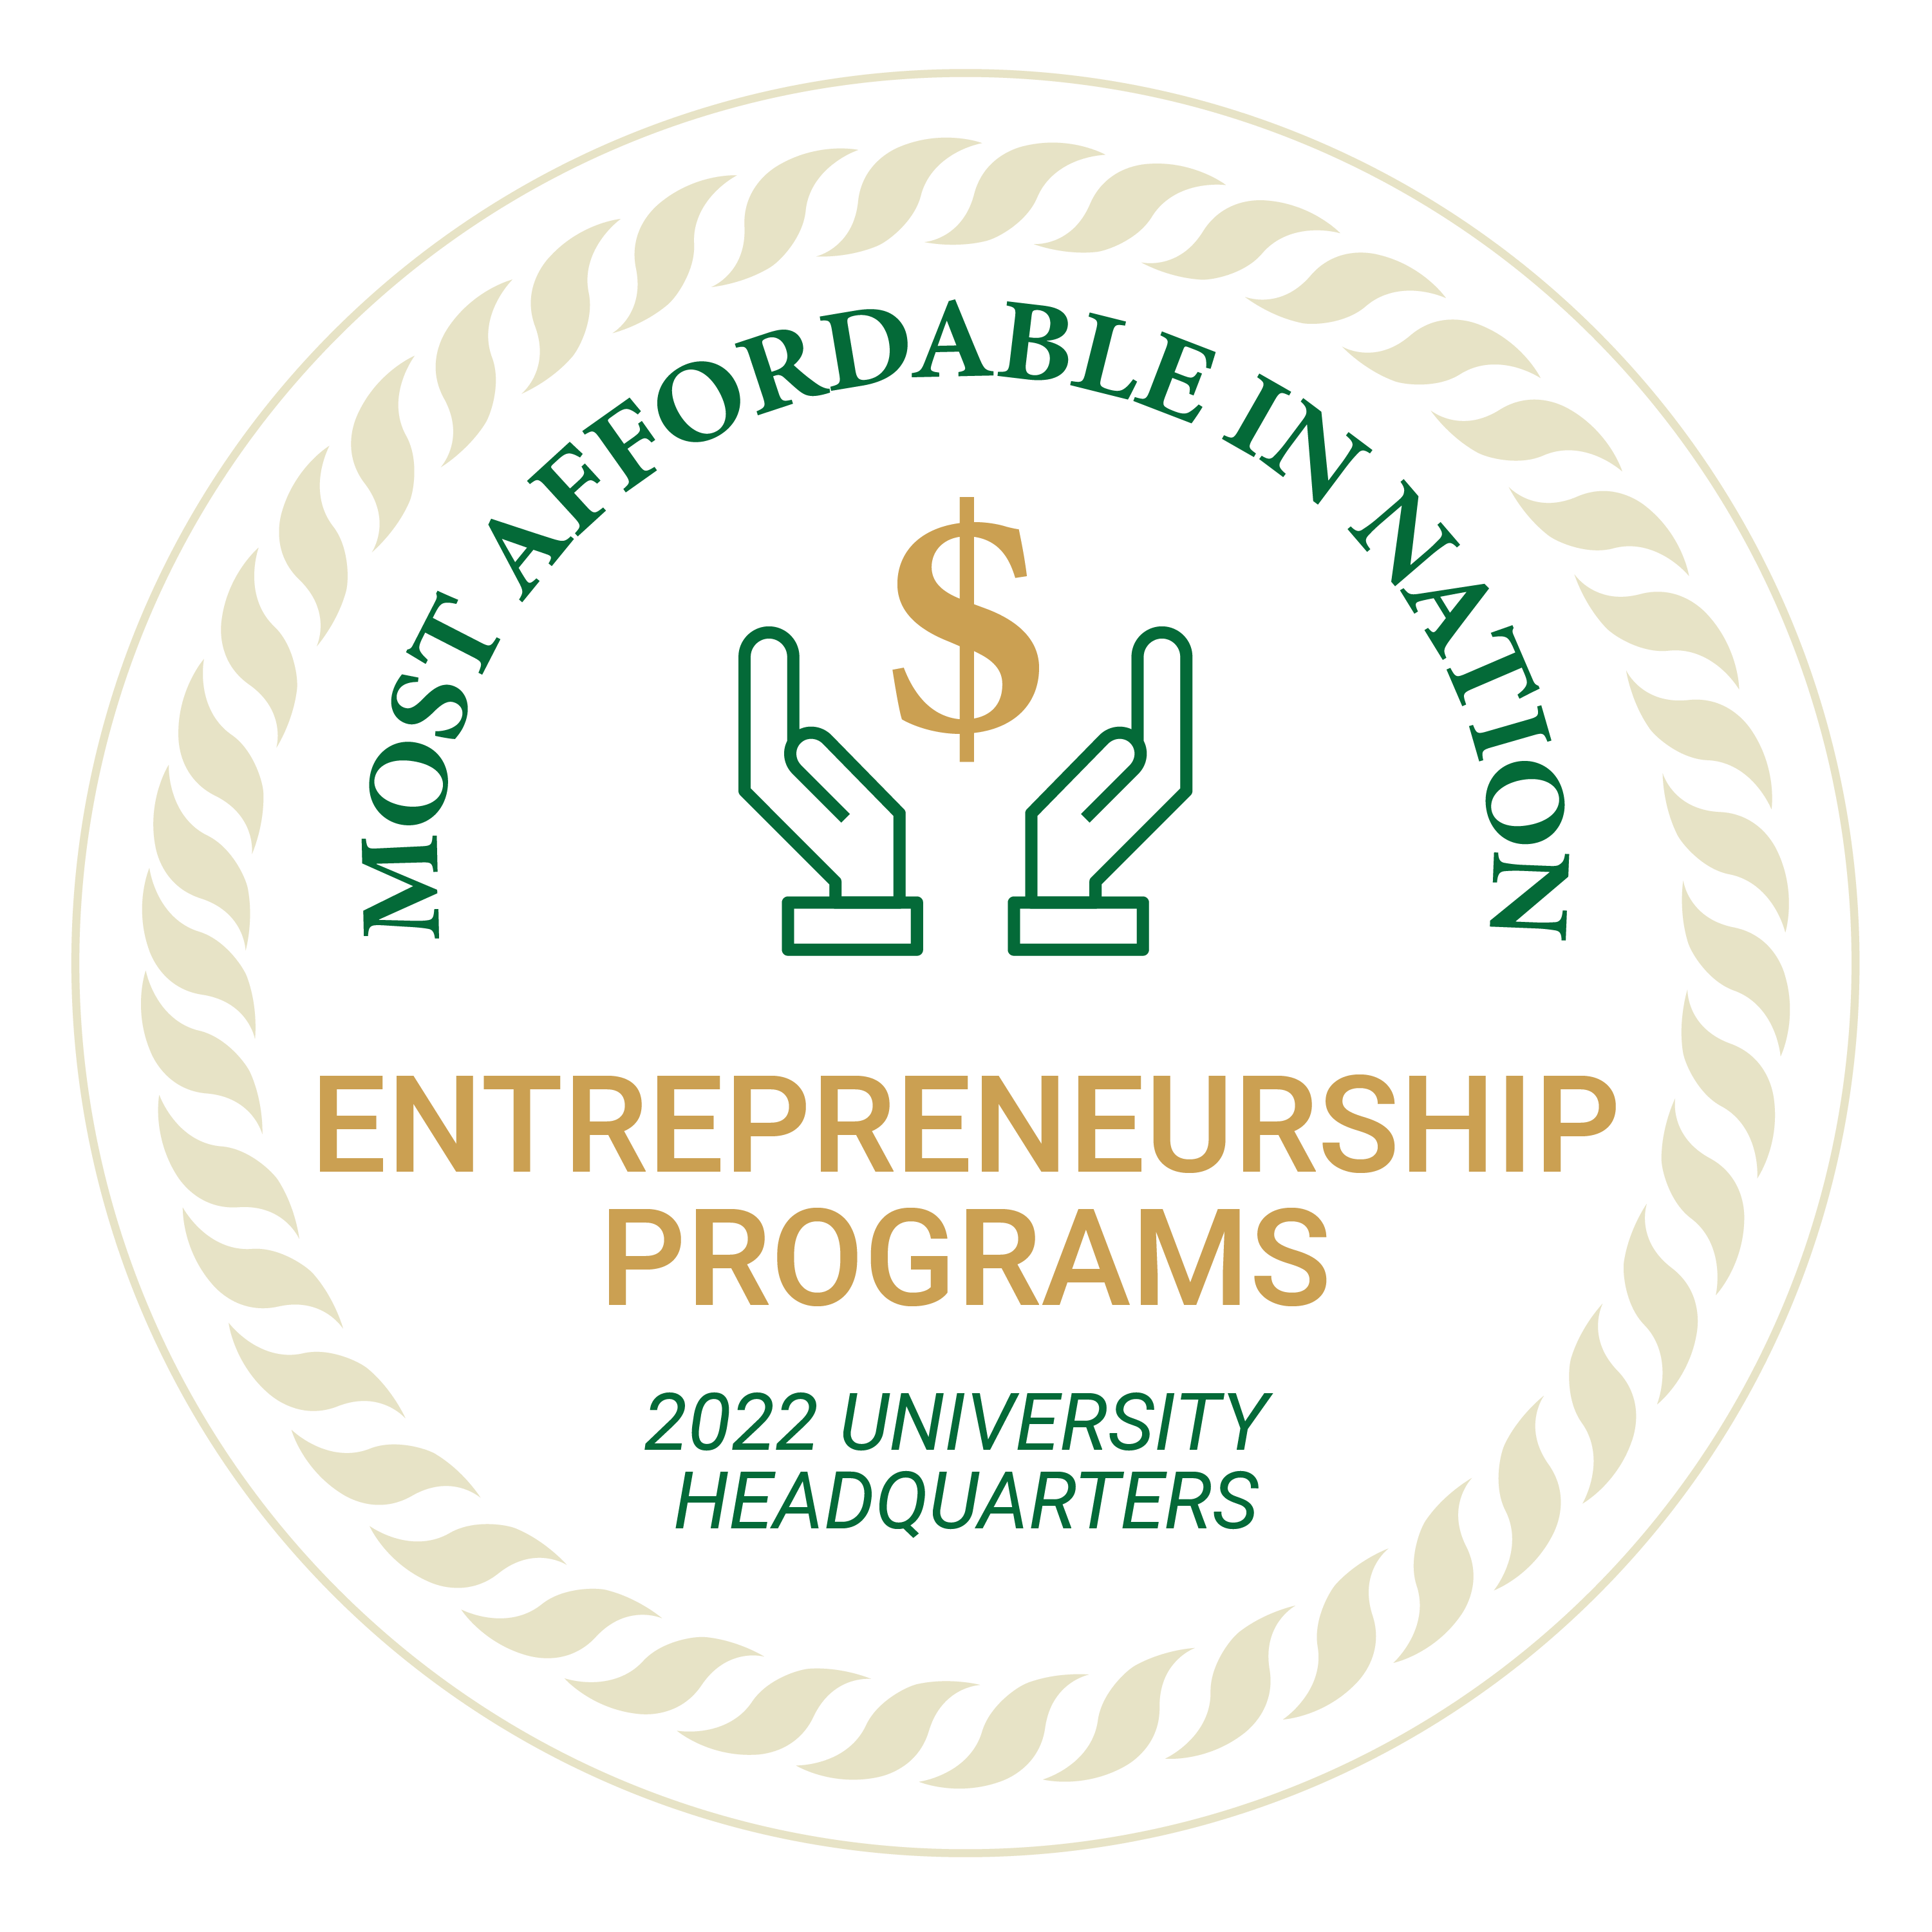 2022 University Headquarters Most Affordable in the National Entrepreneurship Programs